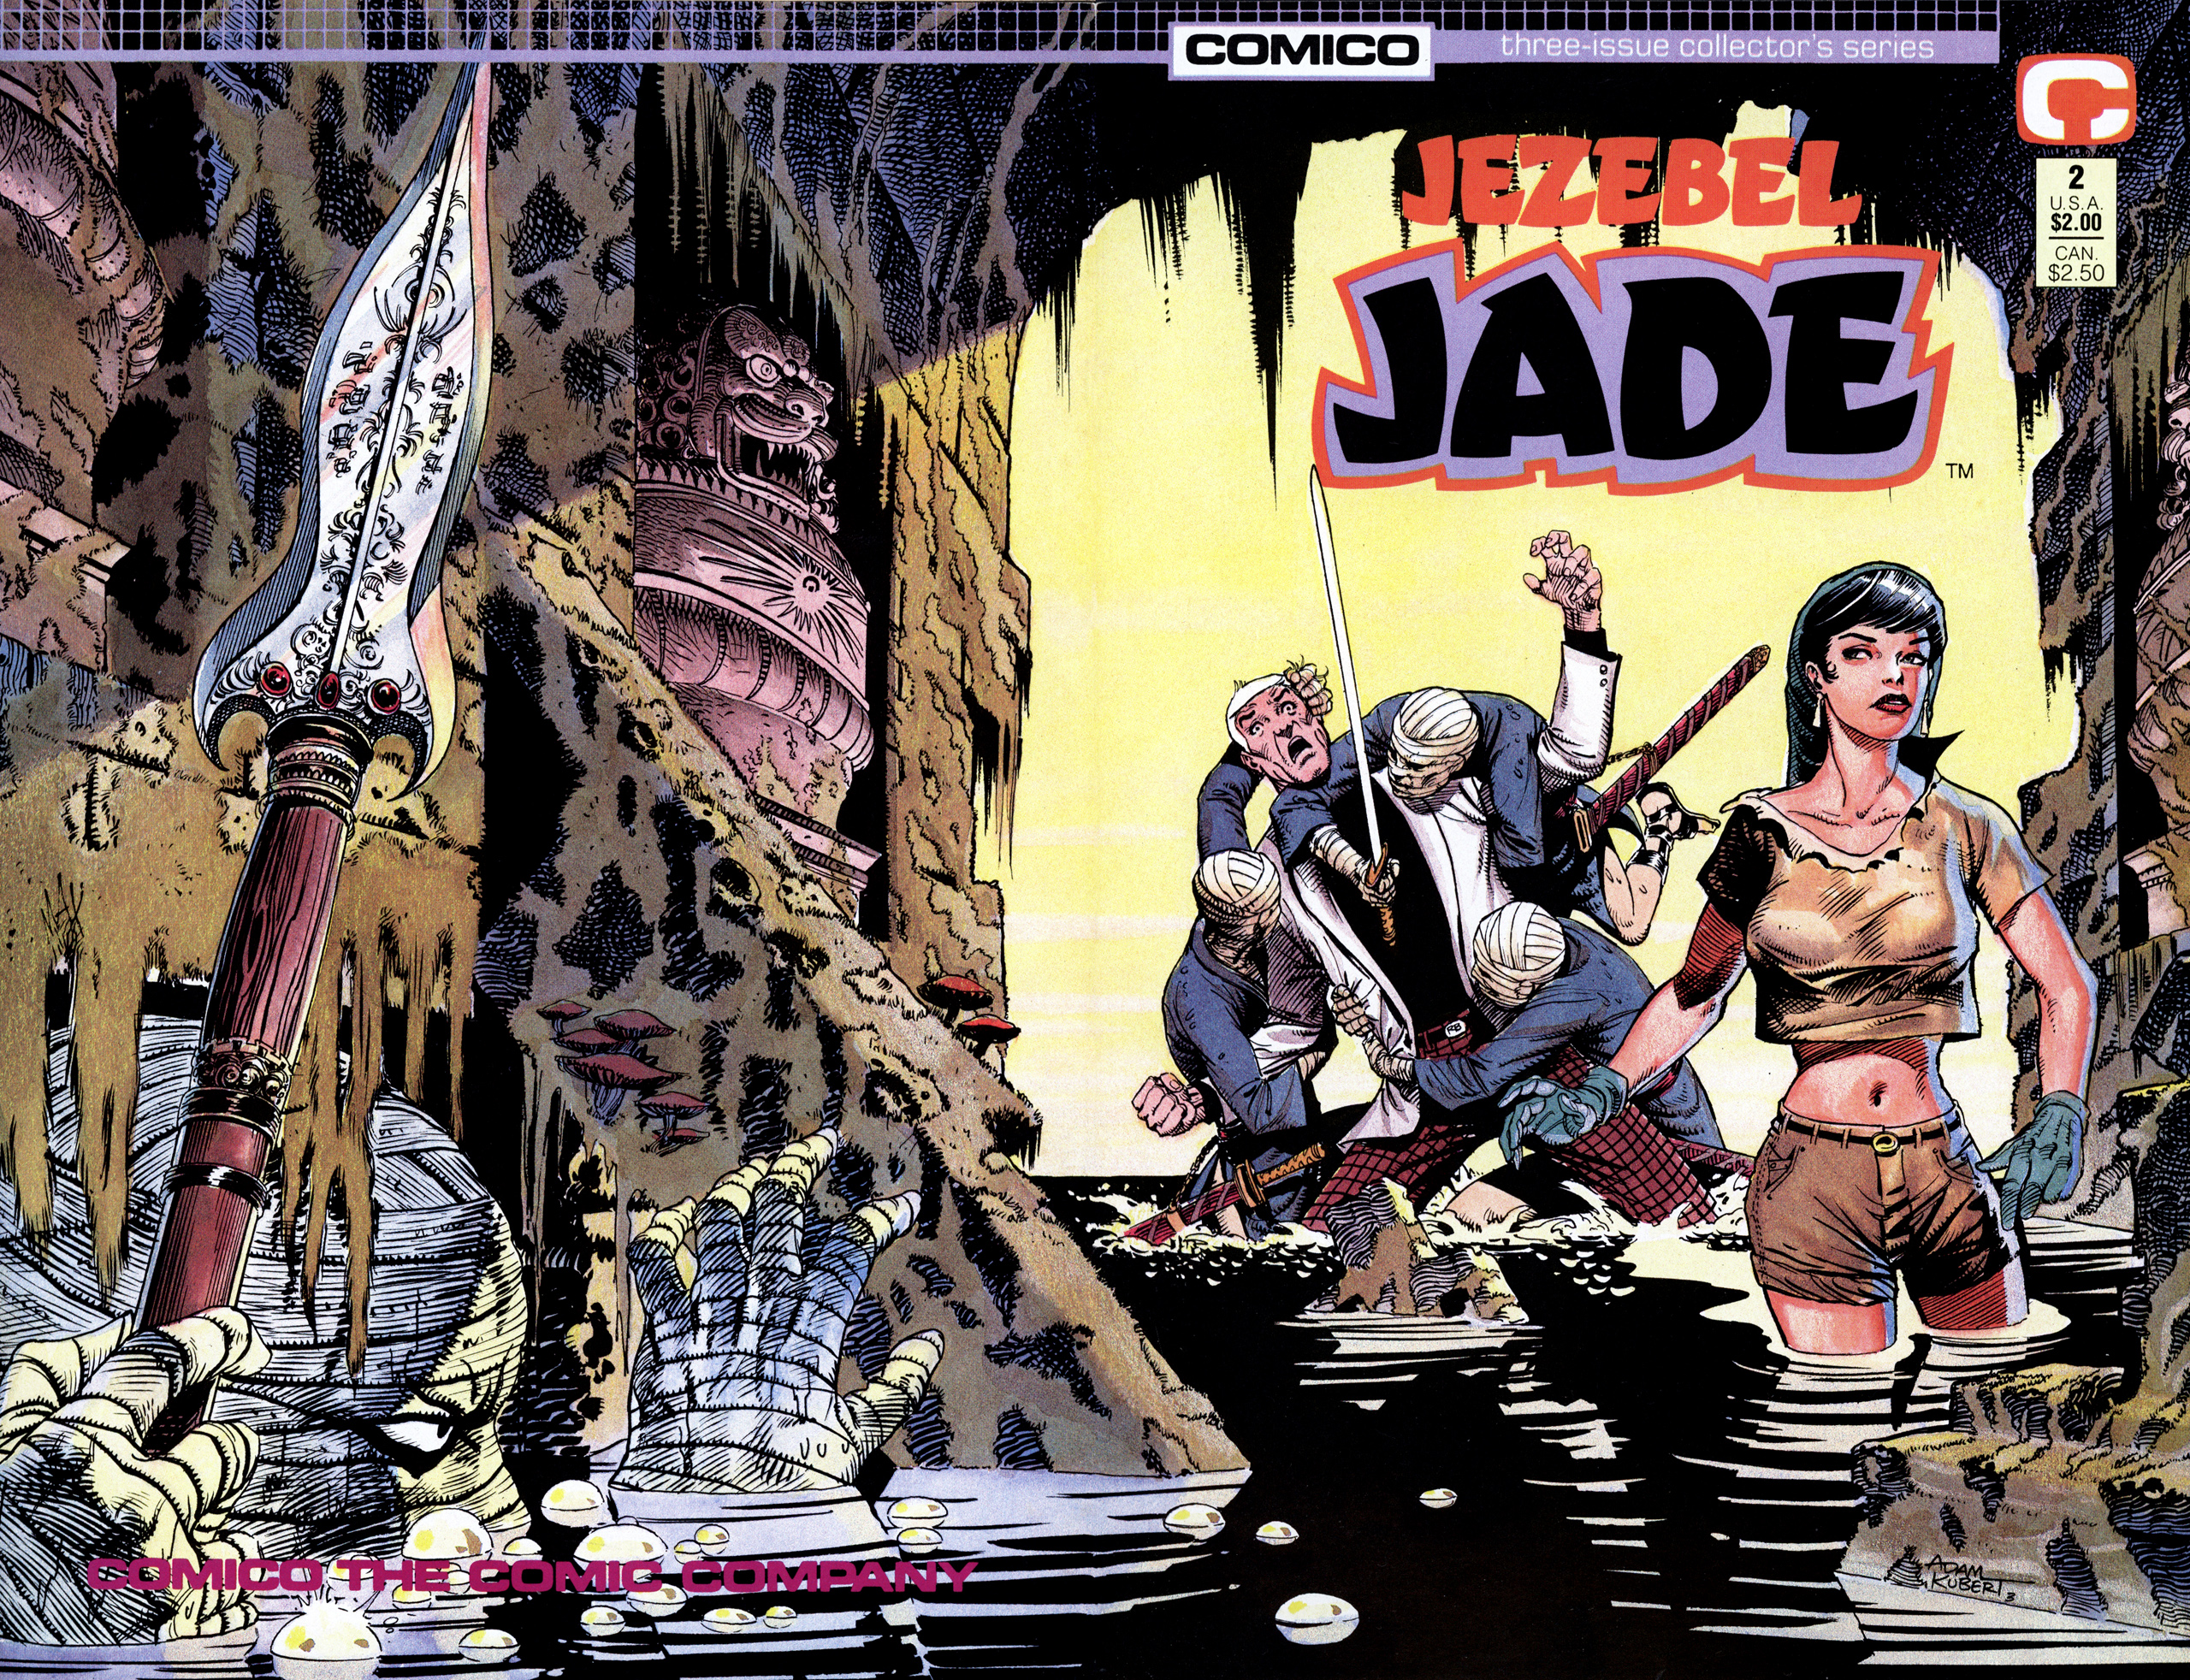 Read online Jezebel Jade comic -  Issue #2 - 1